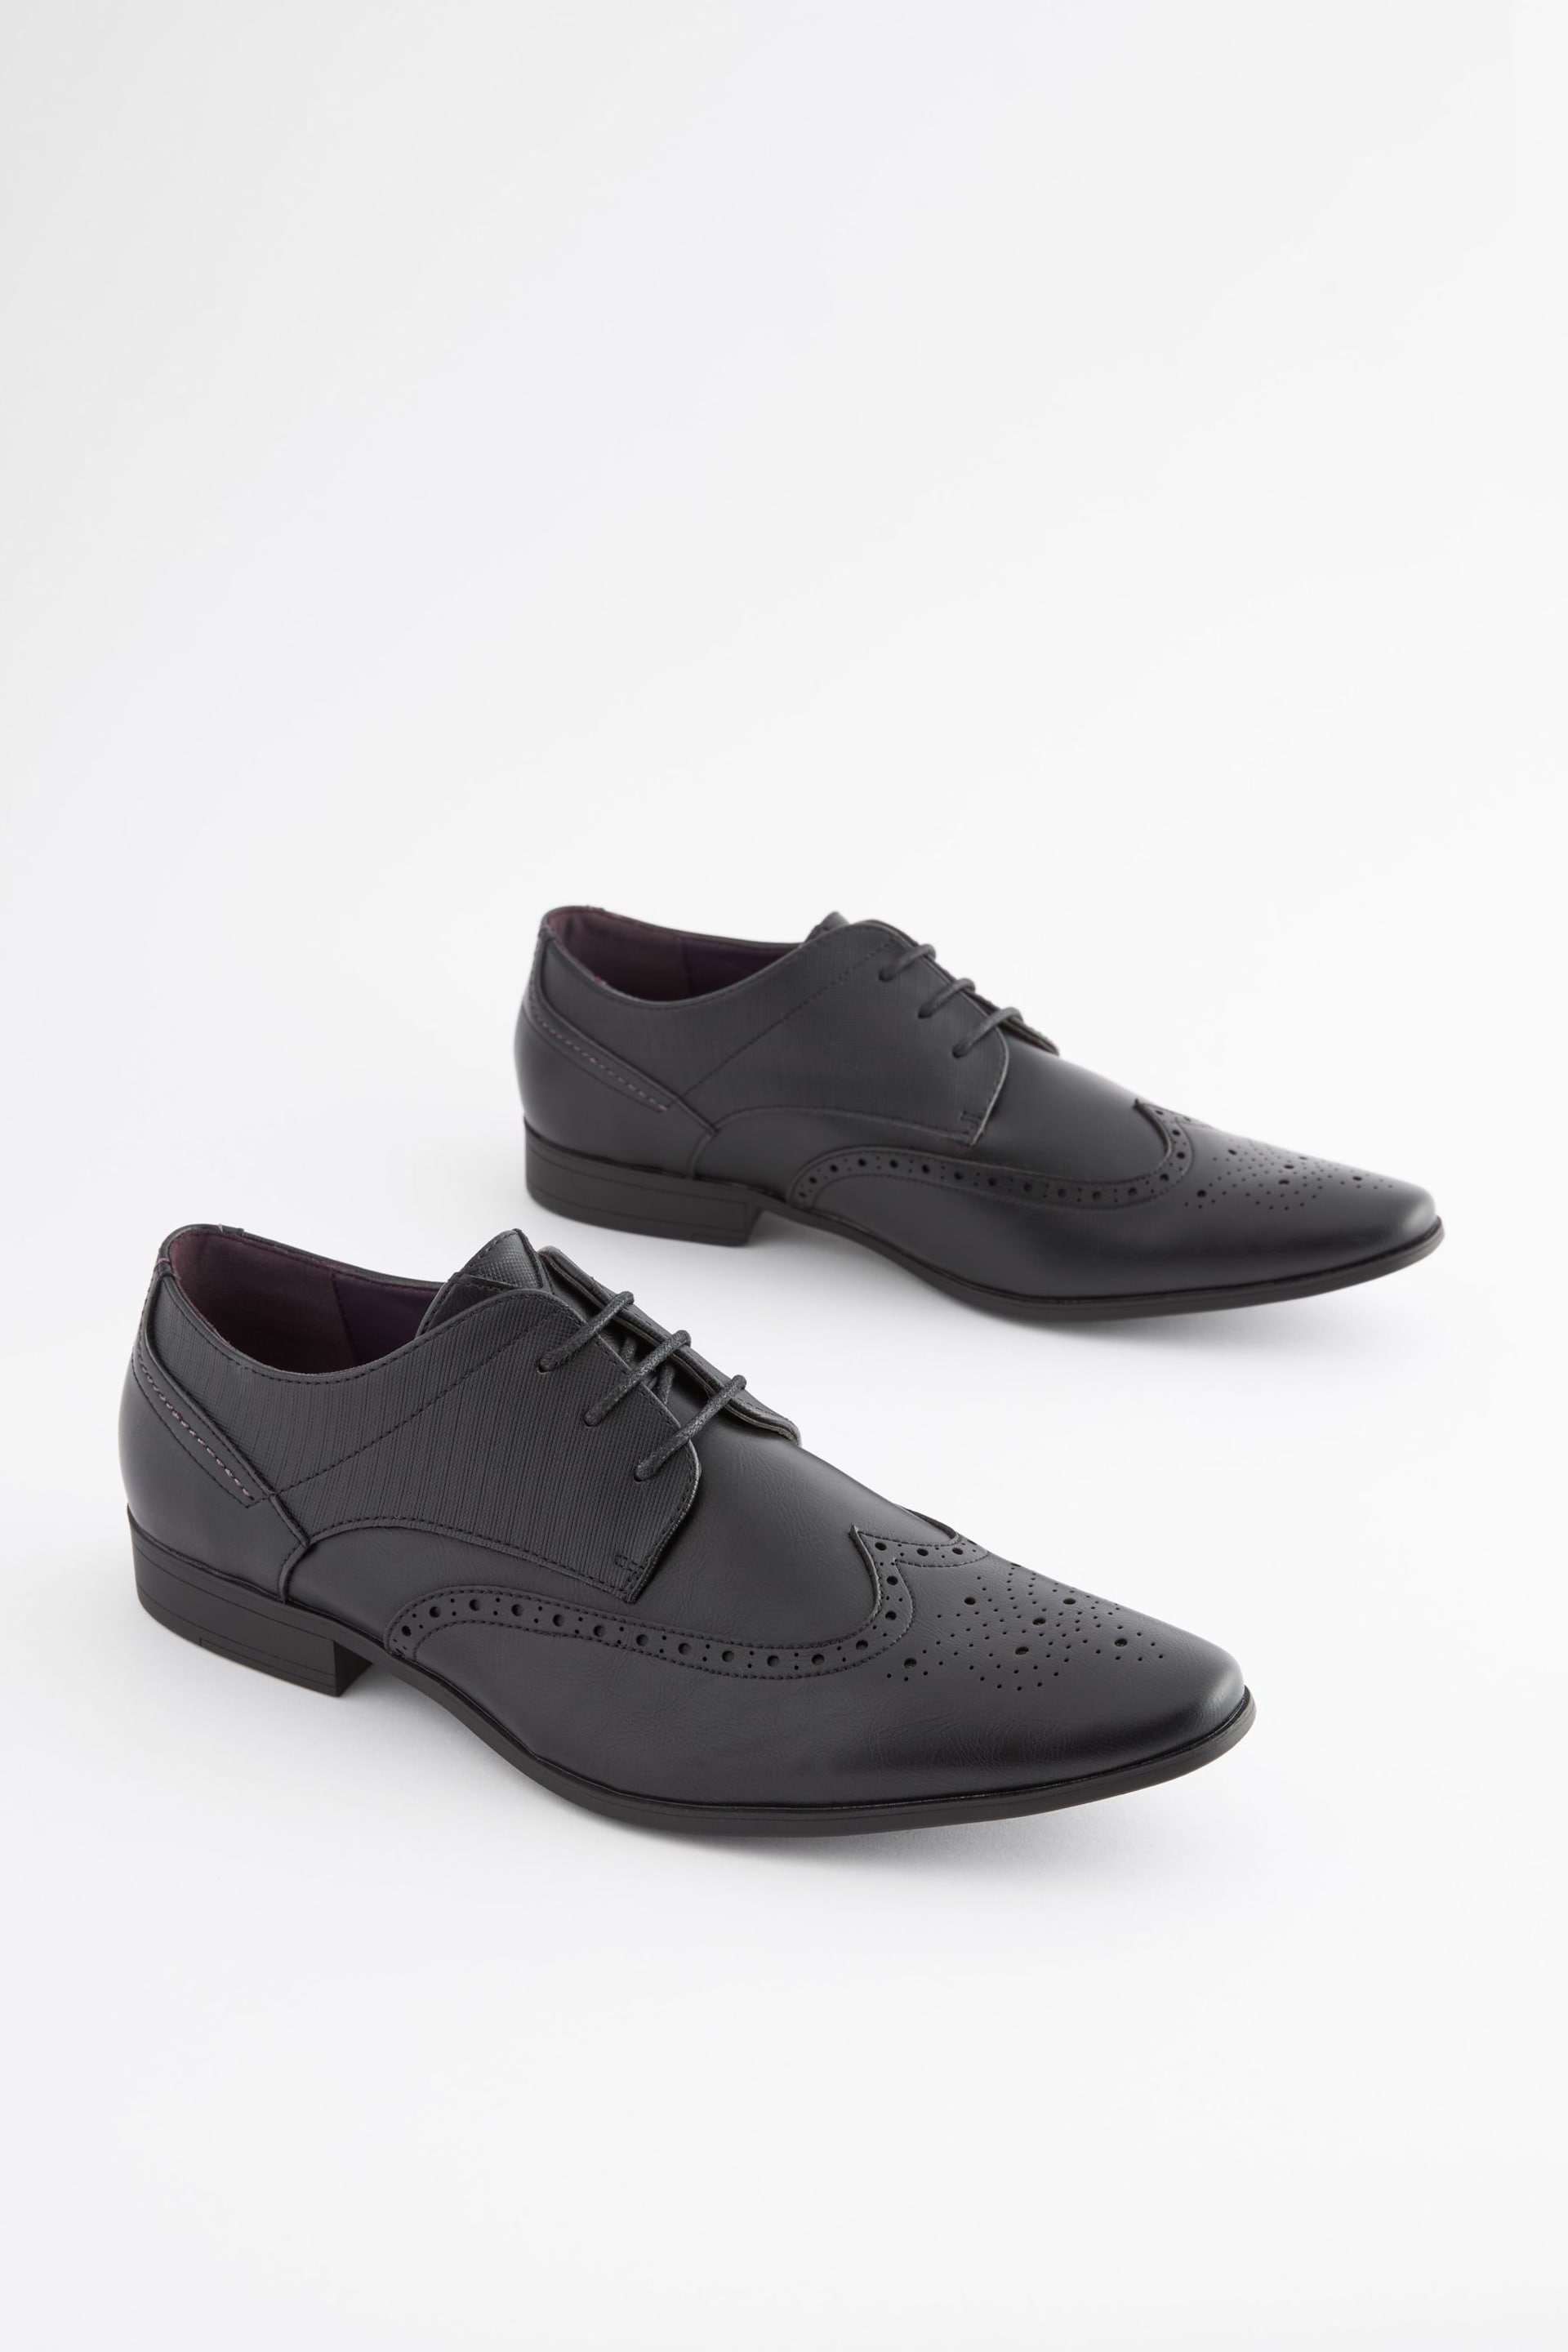 Black Brogue Shoes - Image 1 of 5